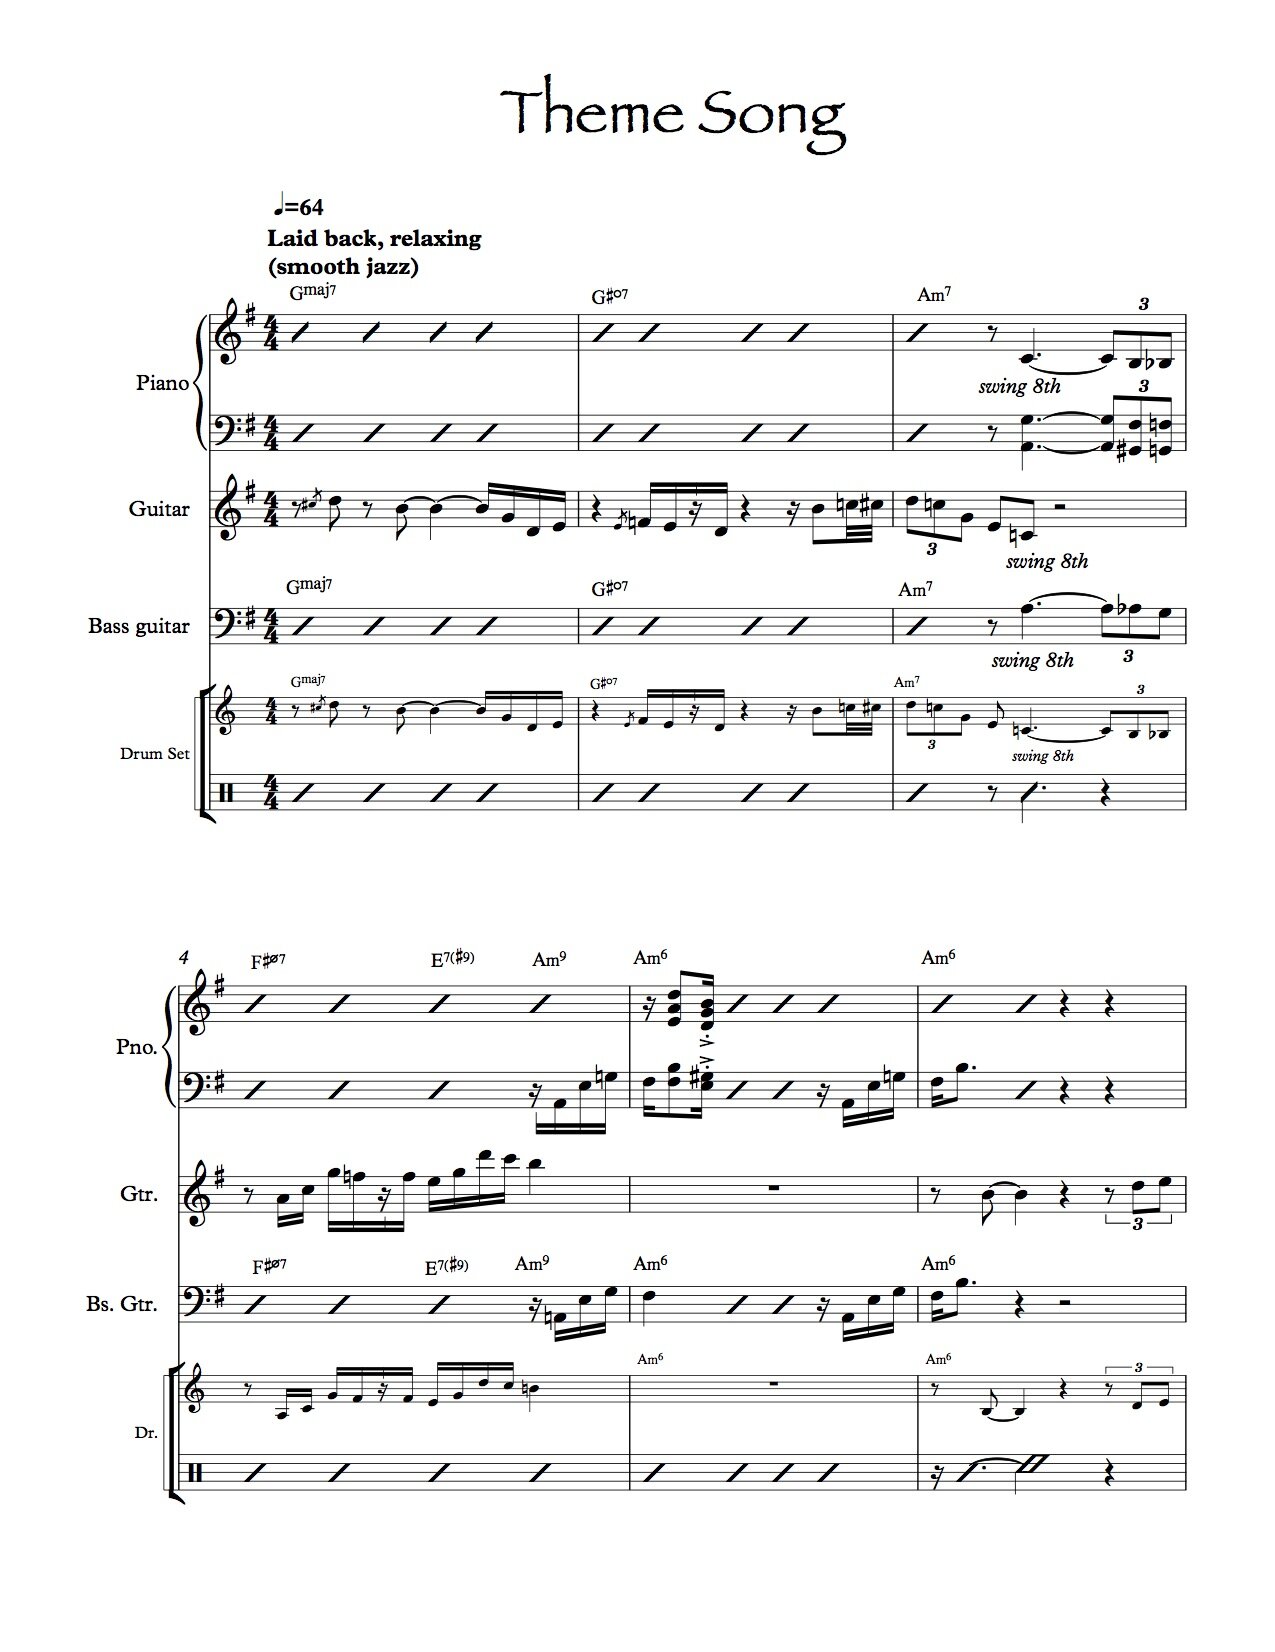 Themes Song(chord symbols) - Full Score.jpg